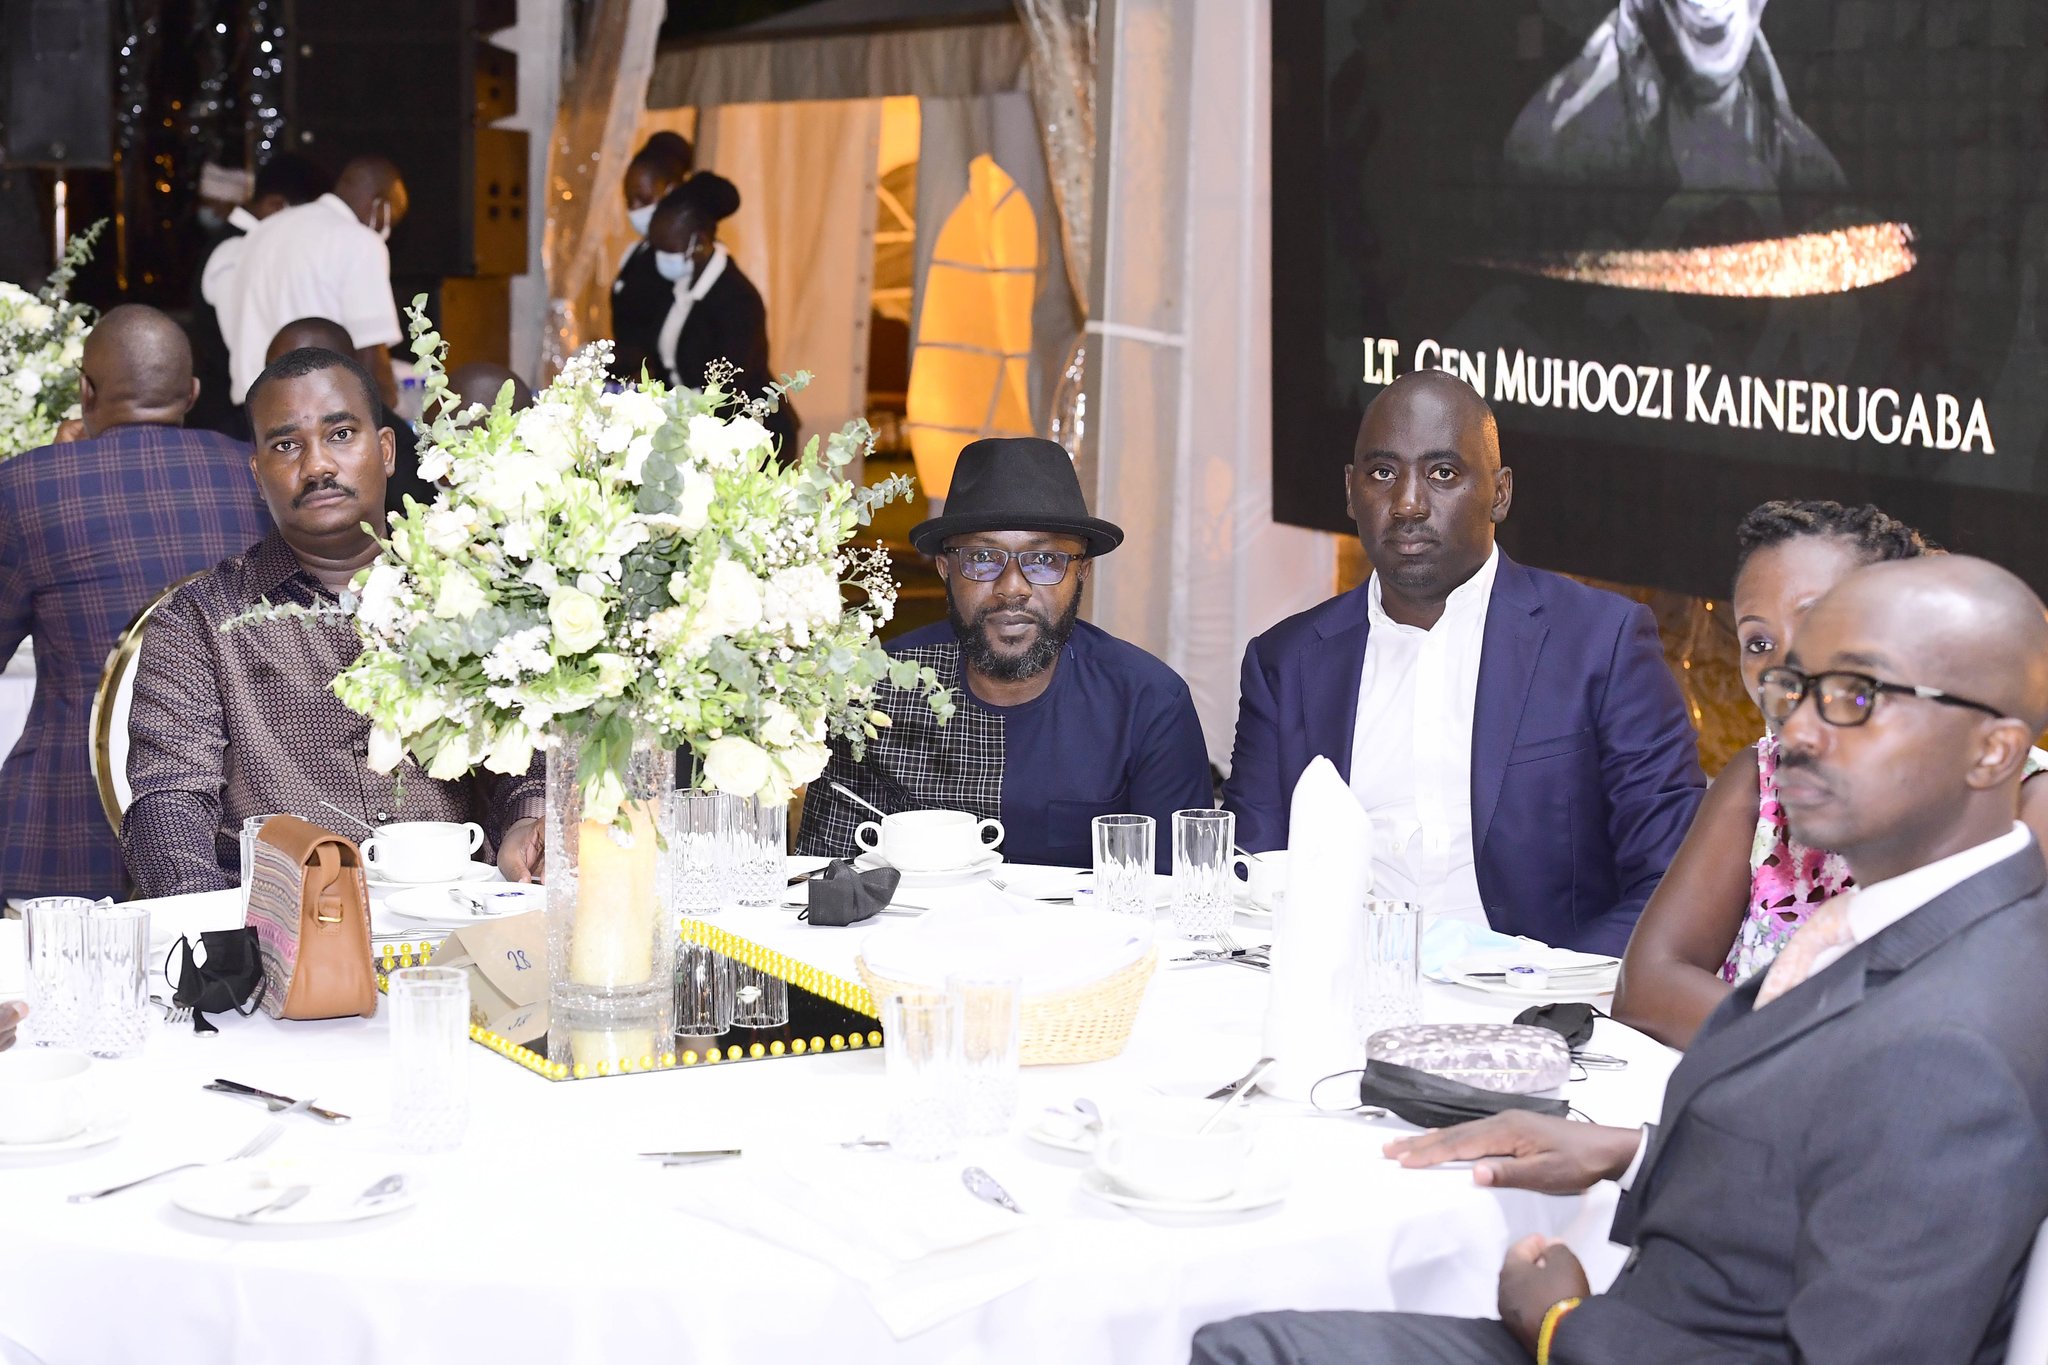 Vision Group CEO Don Wanyama and other friends of Muhoozi Kainerugaba